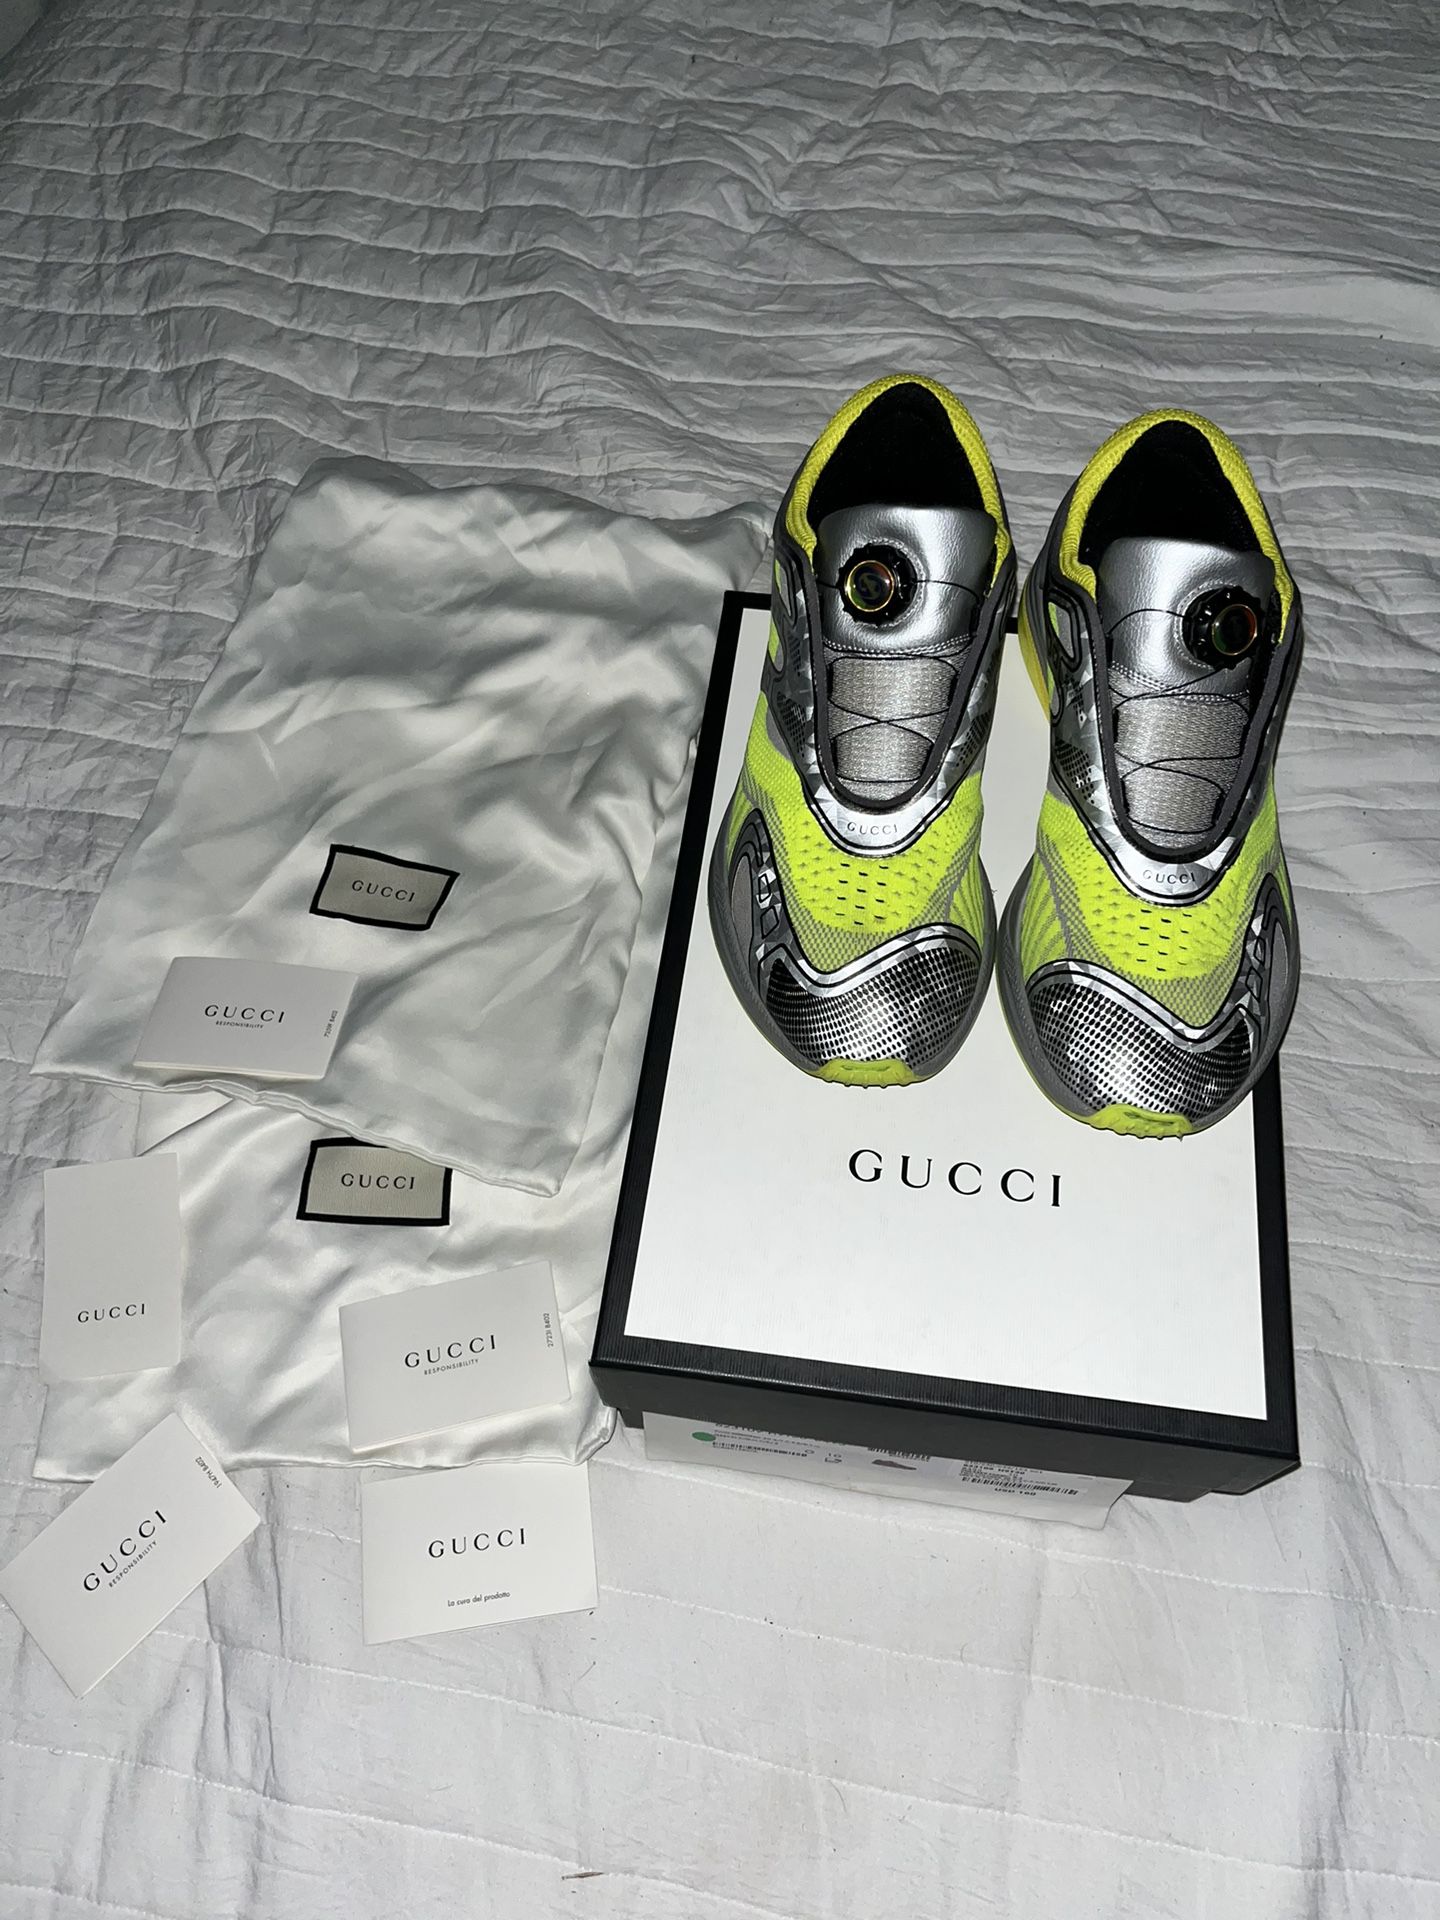 Gucci Shoes Size 11